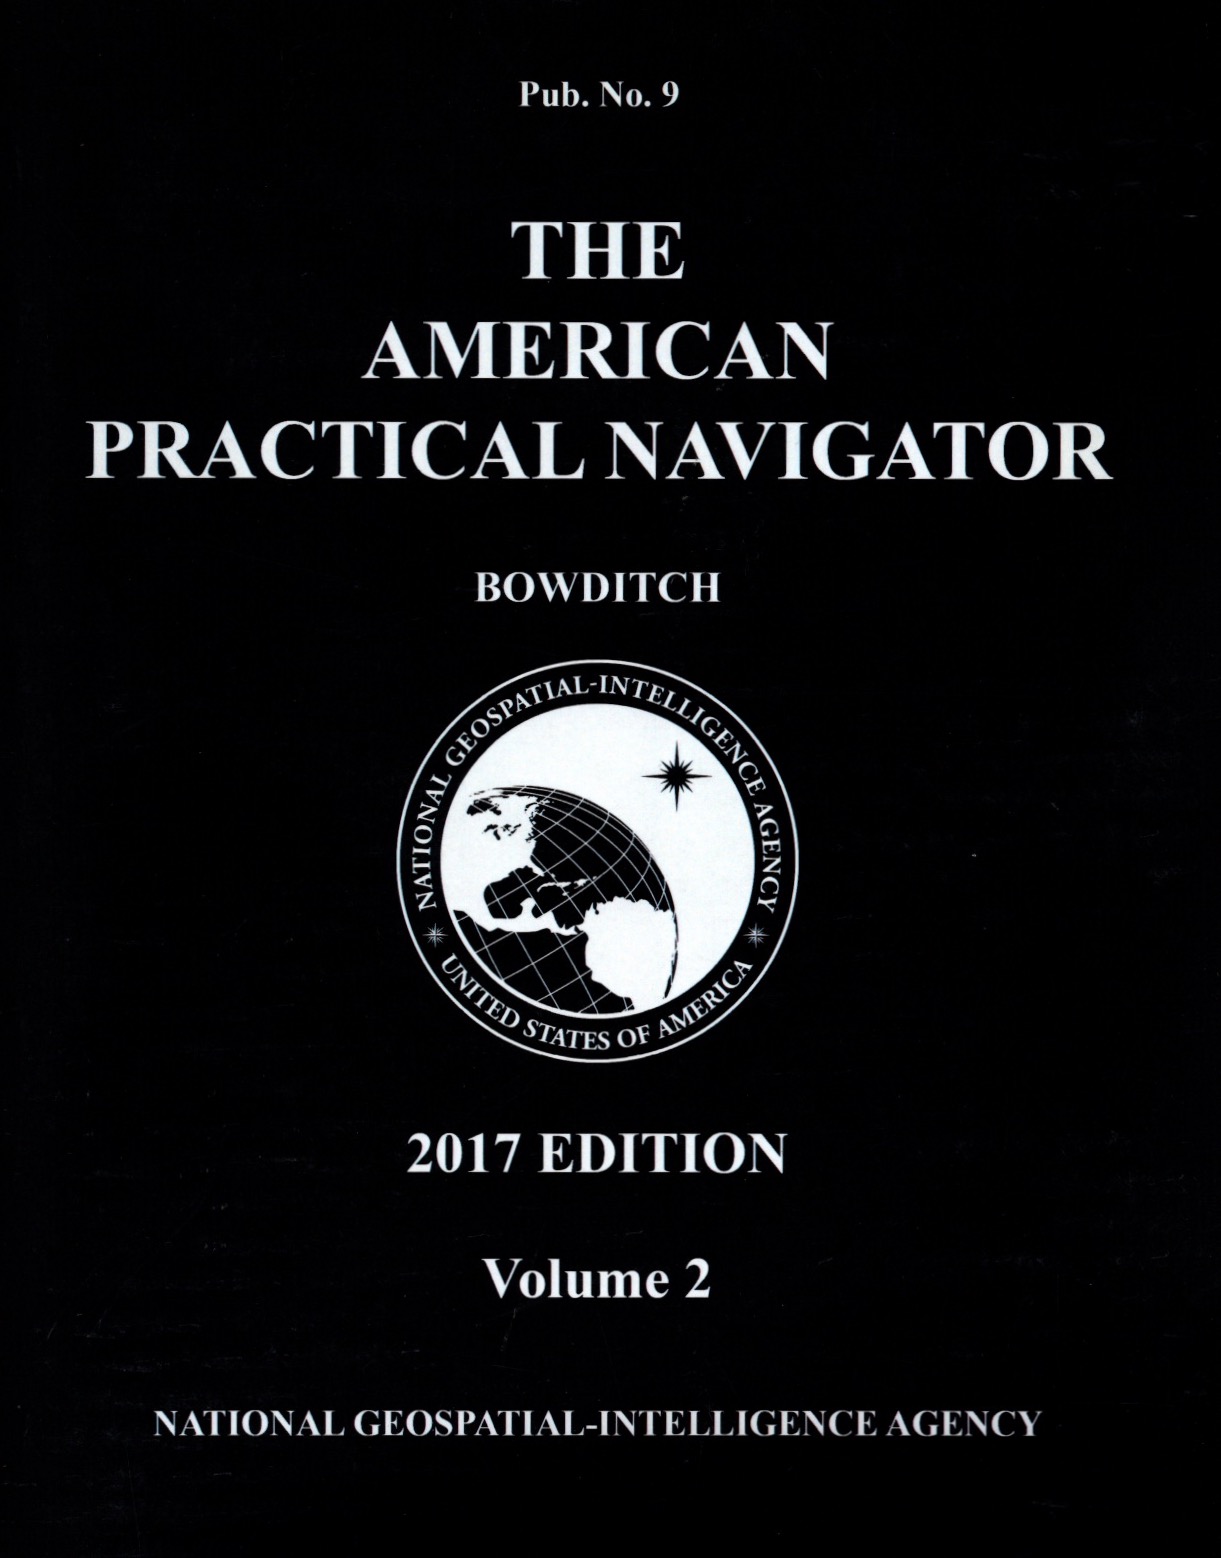 American practical navigator - bowditch vol.2